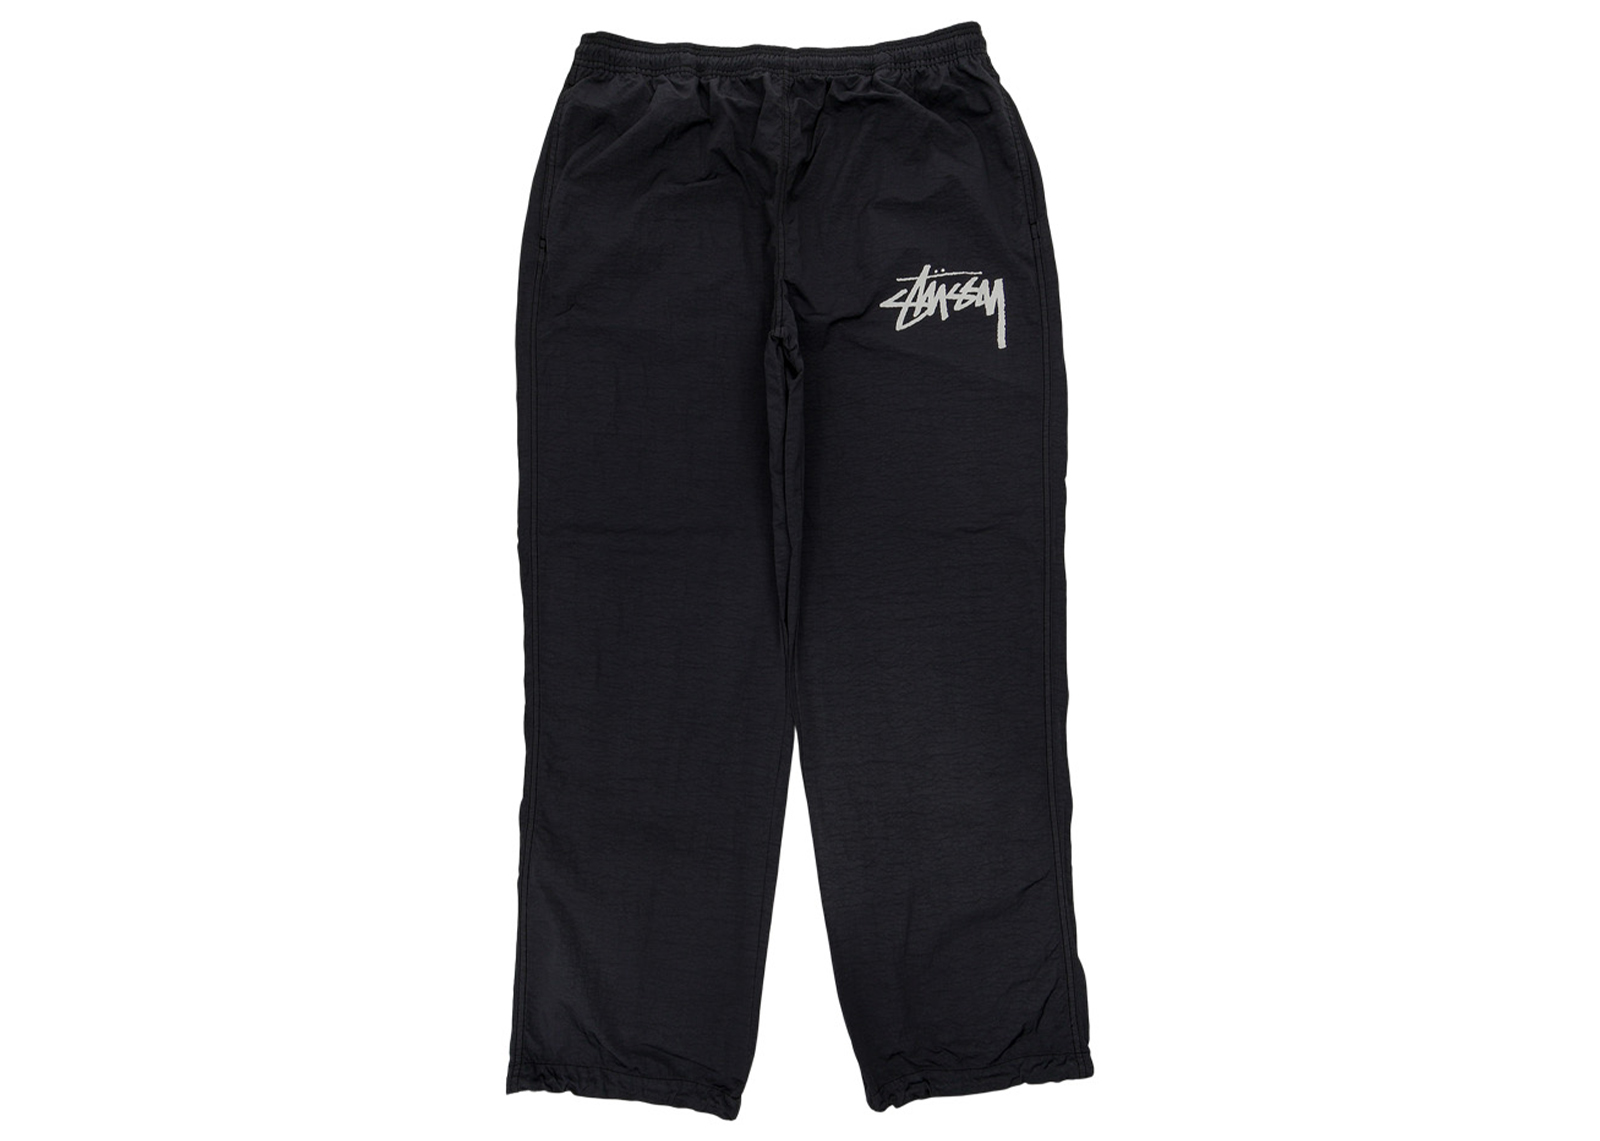 Nike x Stussy Beach Pants Off Noir